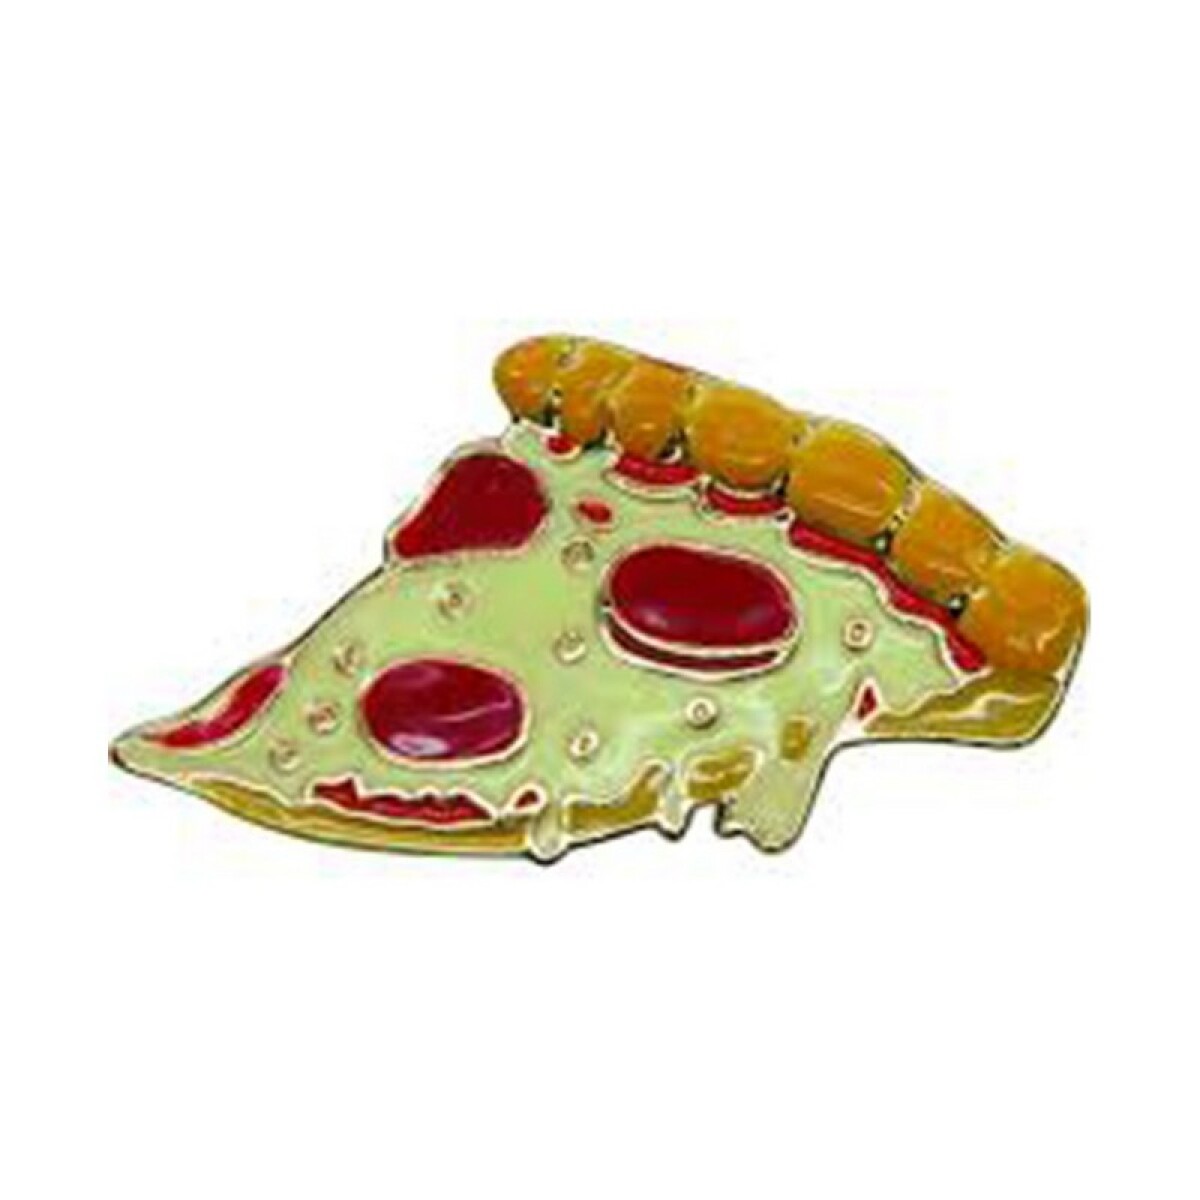 Jibbitz™ Charm Pizza Slice - Multicolor 